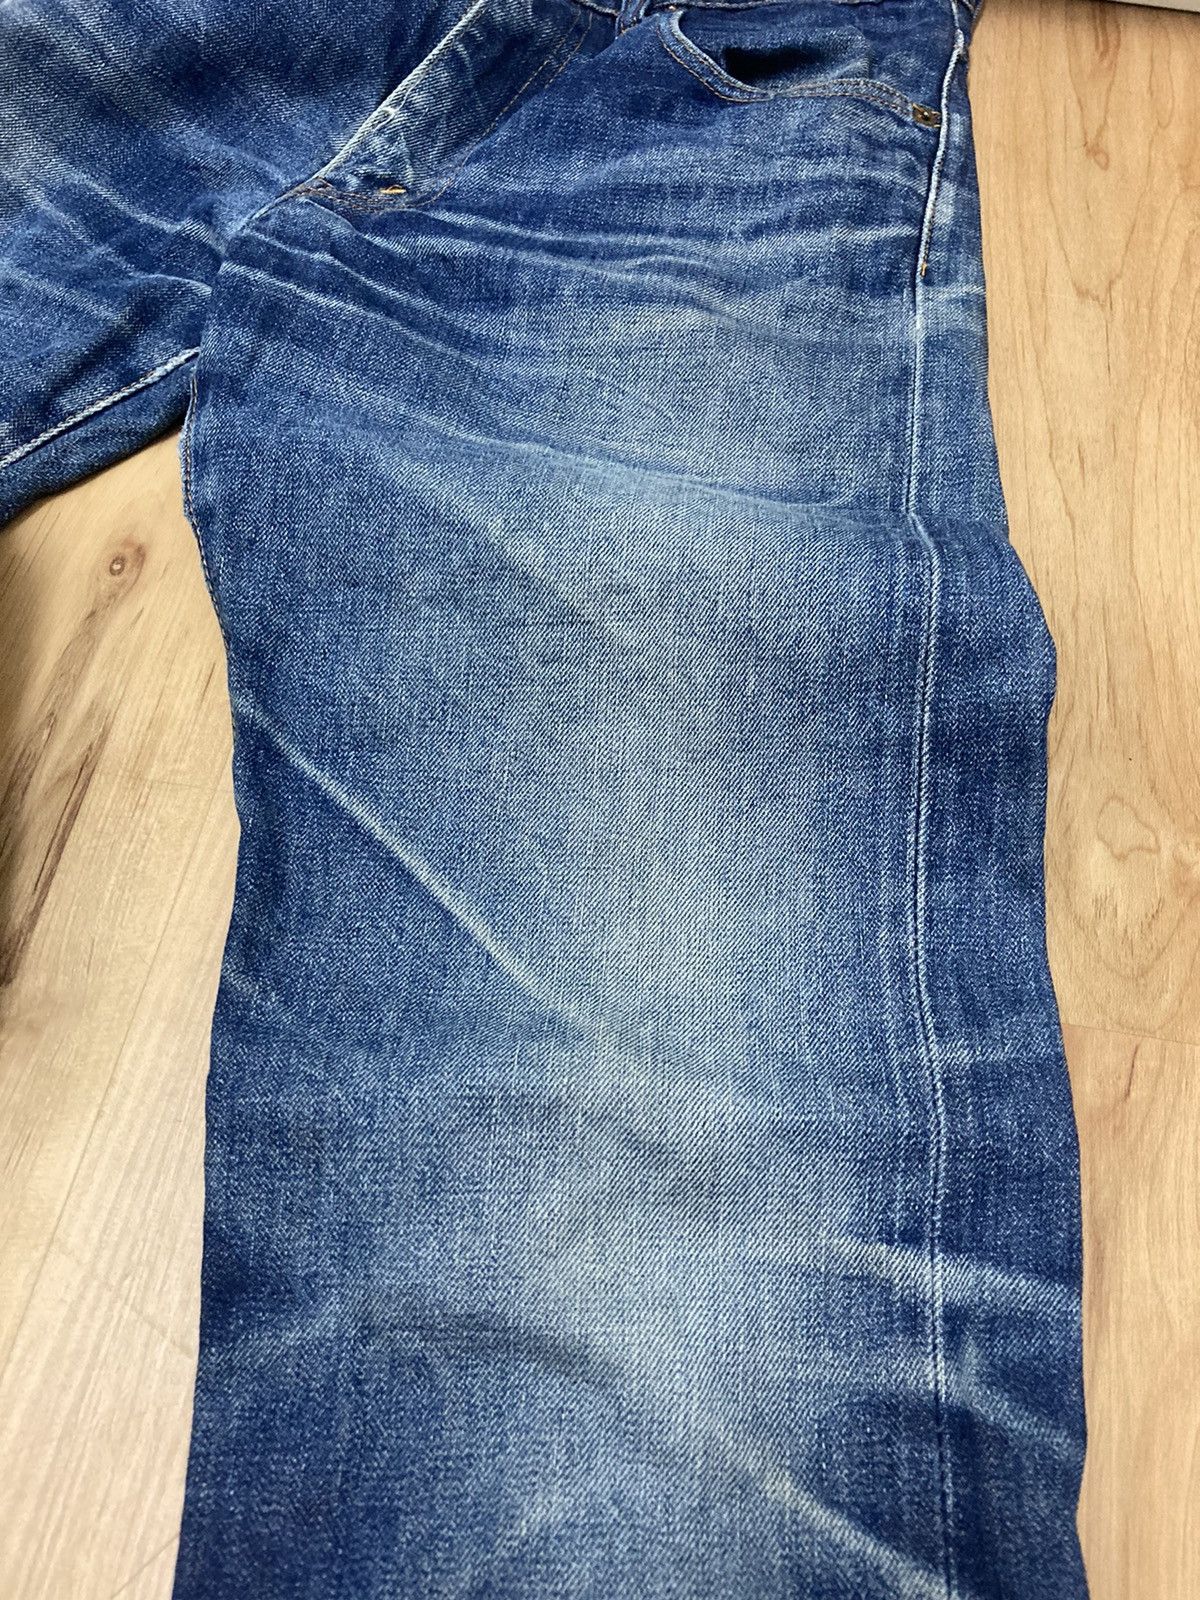 Denime Vintage denime jeans Size US 30 / EU 46 - 4 Thumbnail